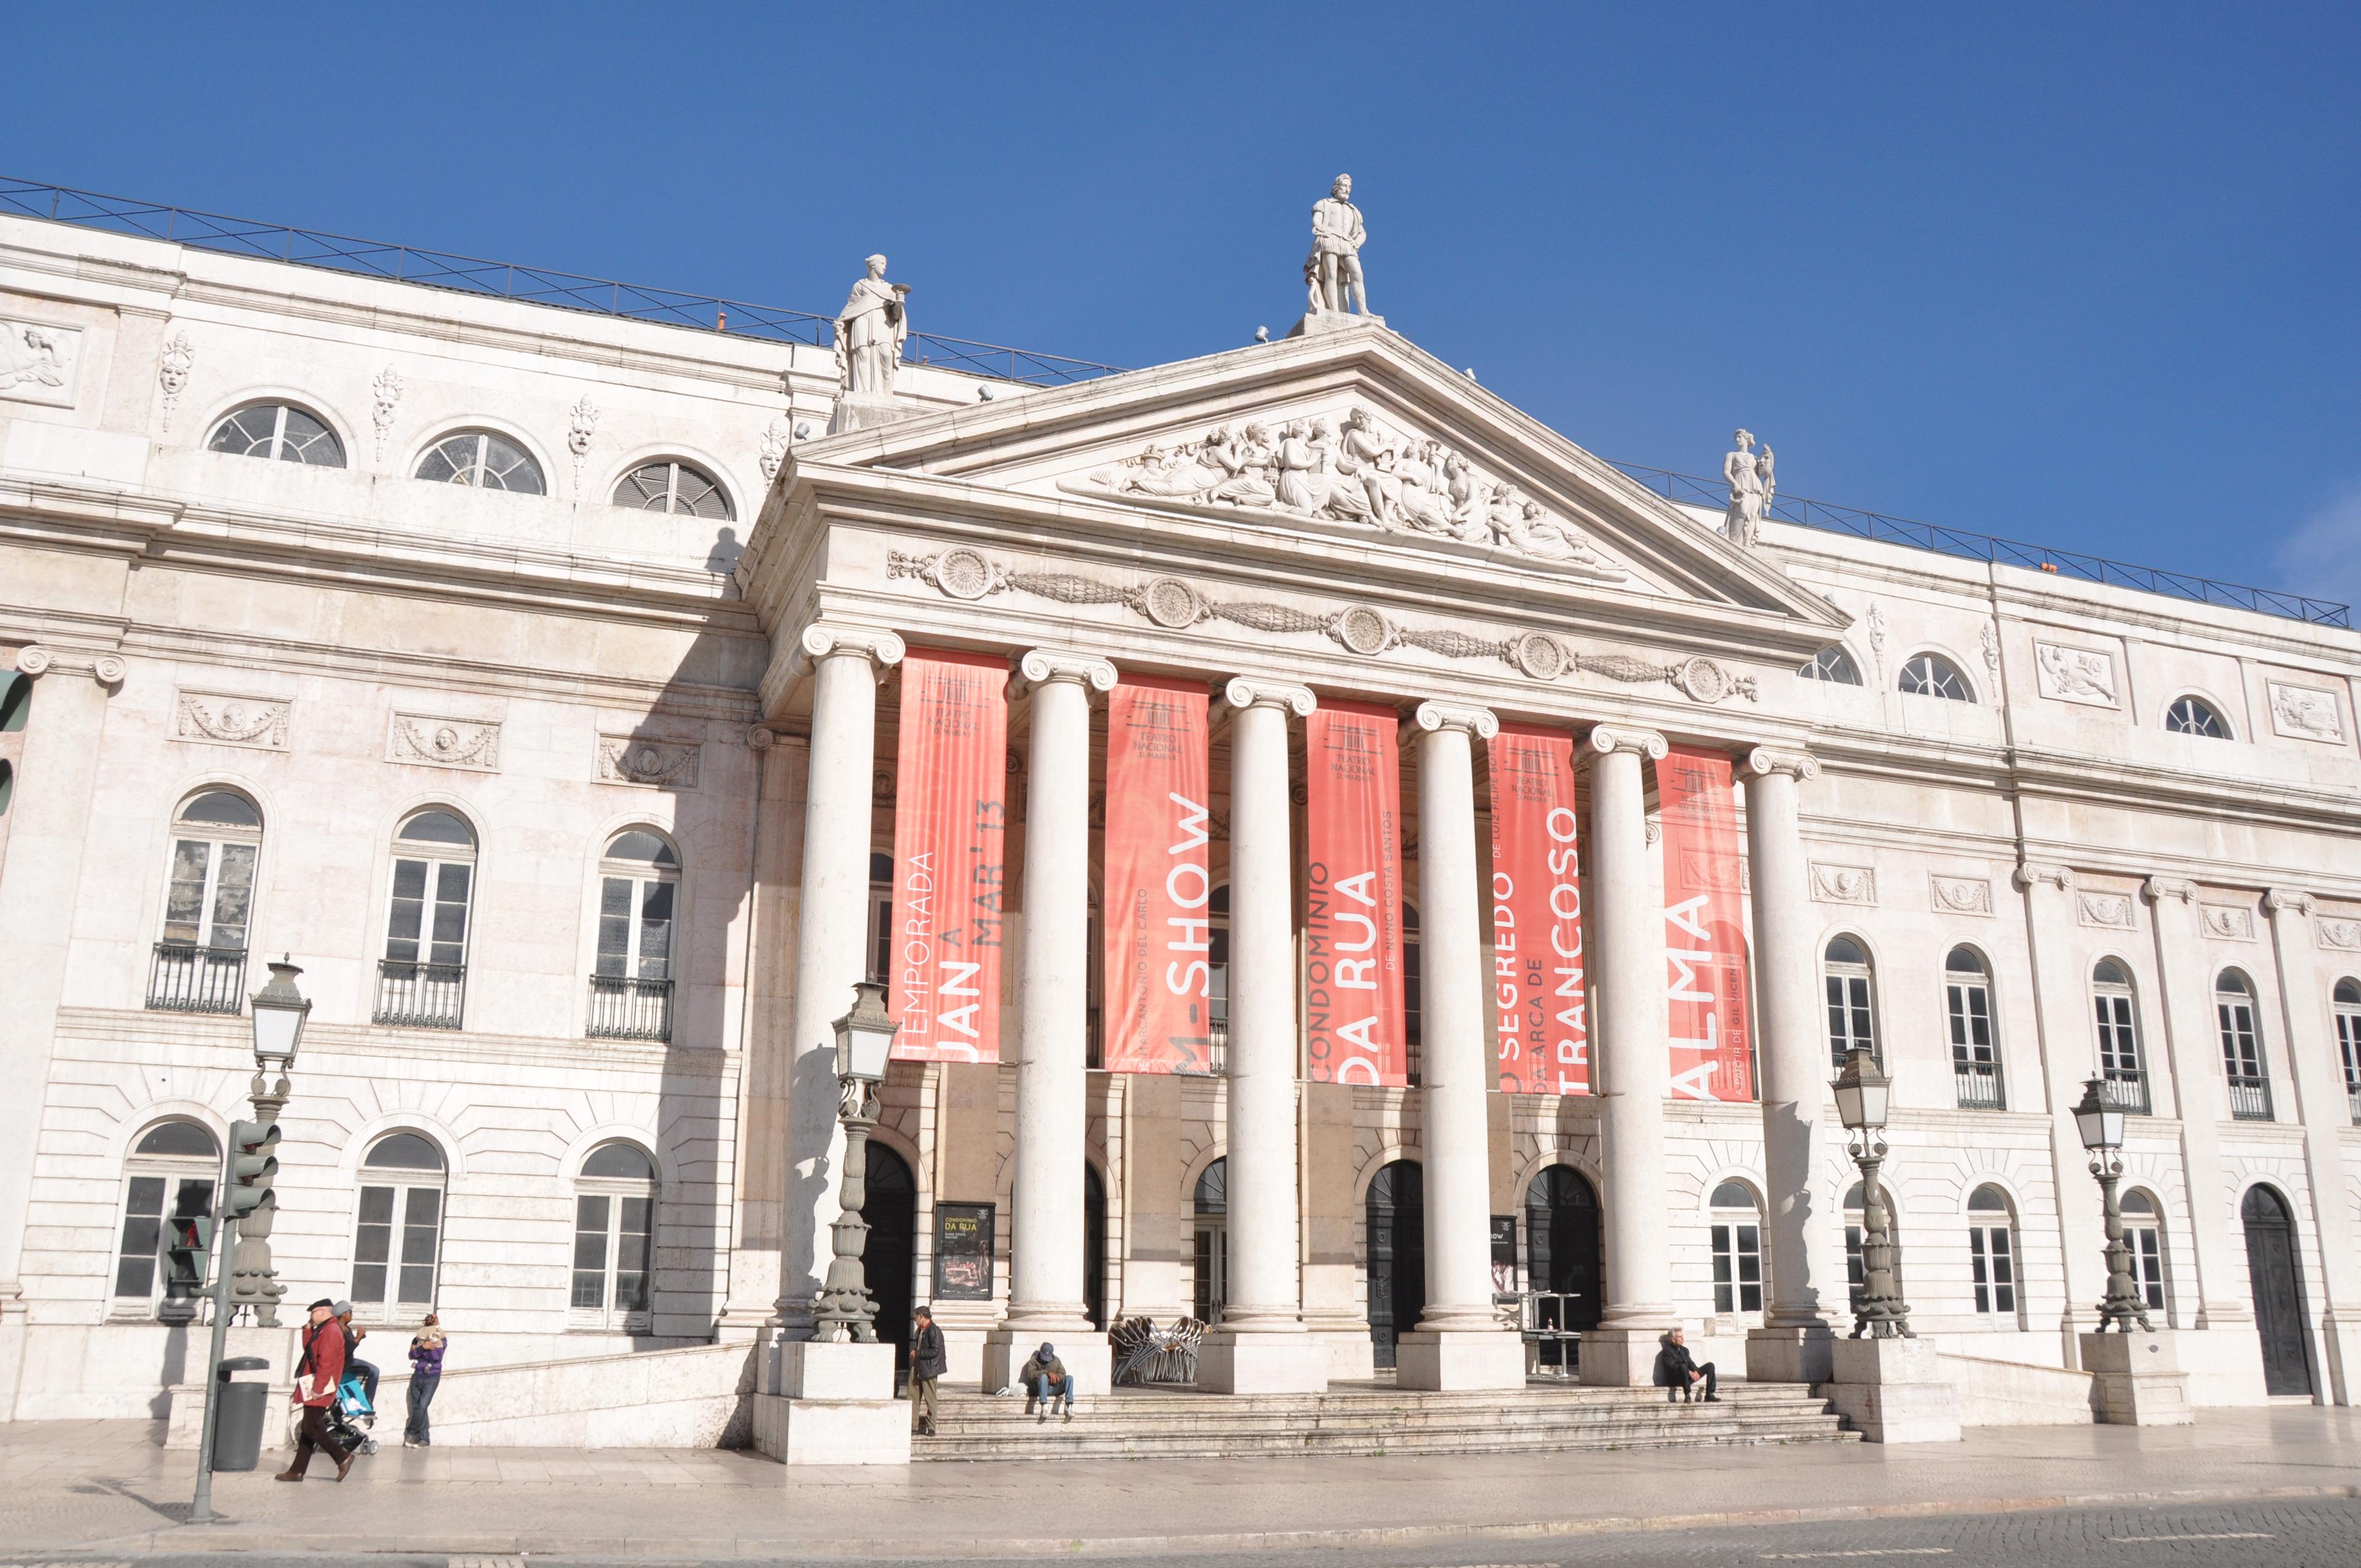 Cover image of this place Teatro Nacional D. Maria II